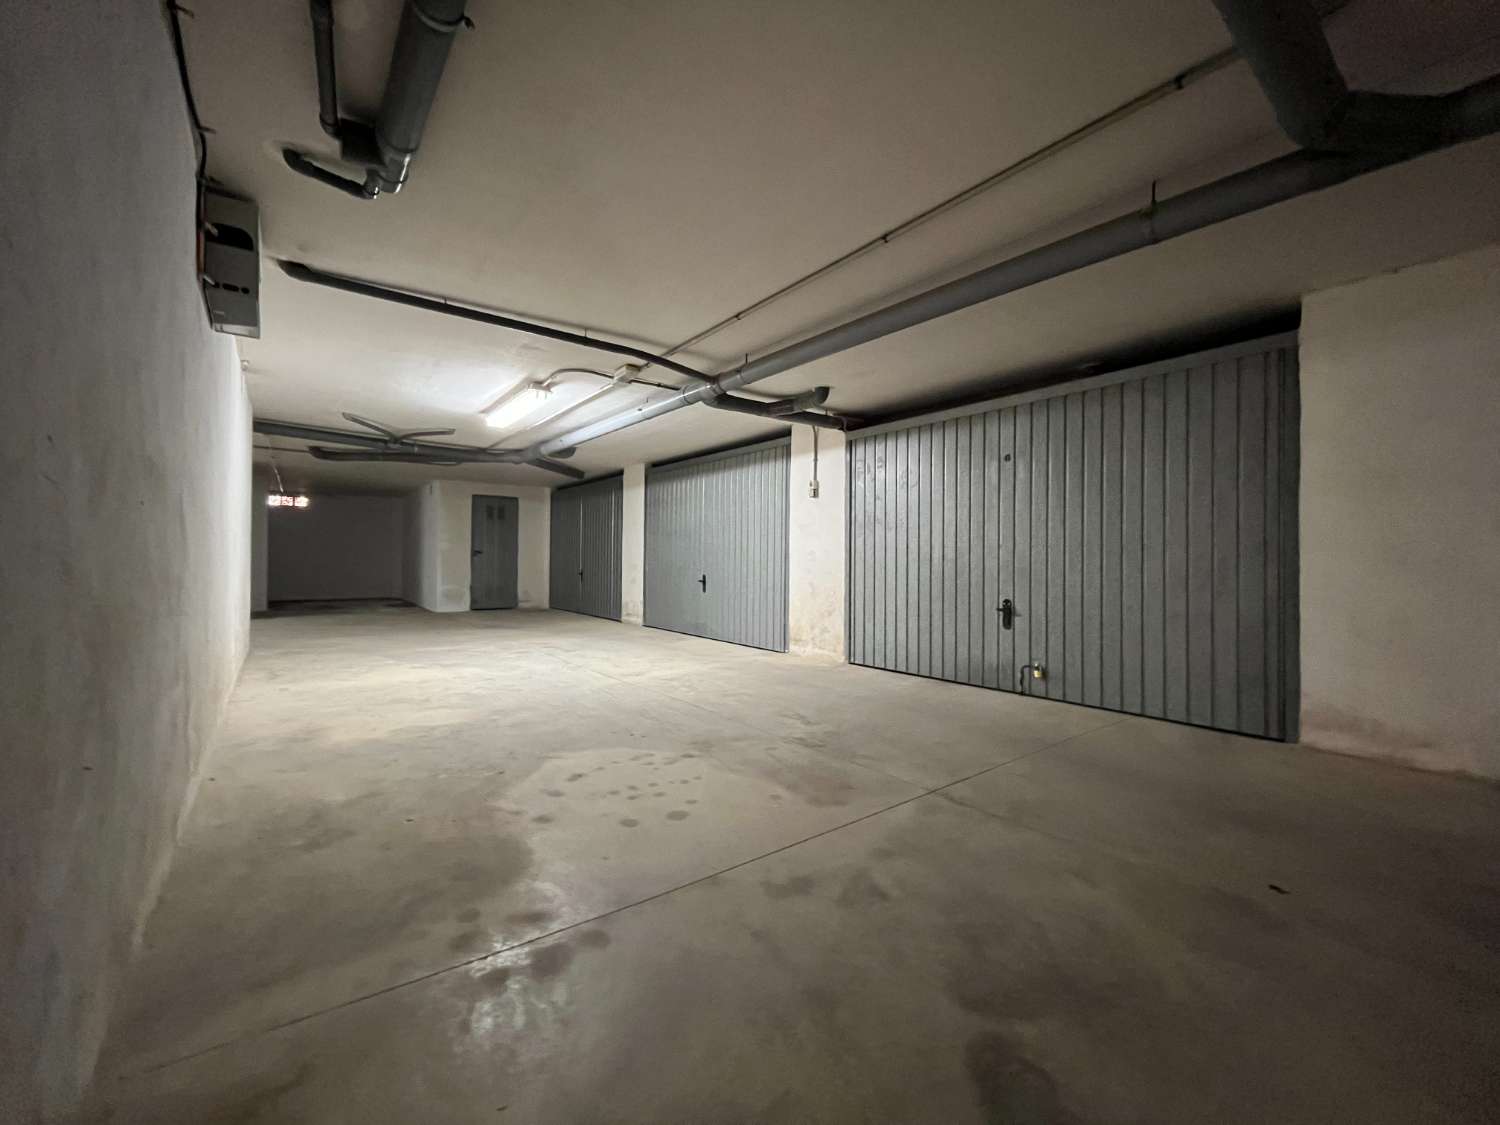 Large enclosed underground garage